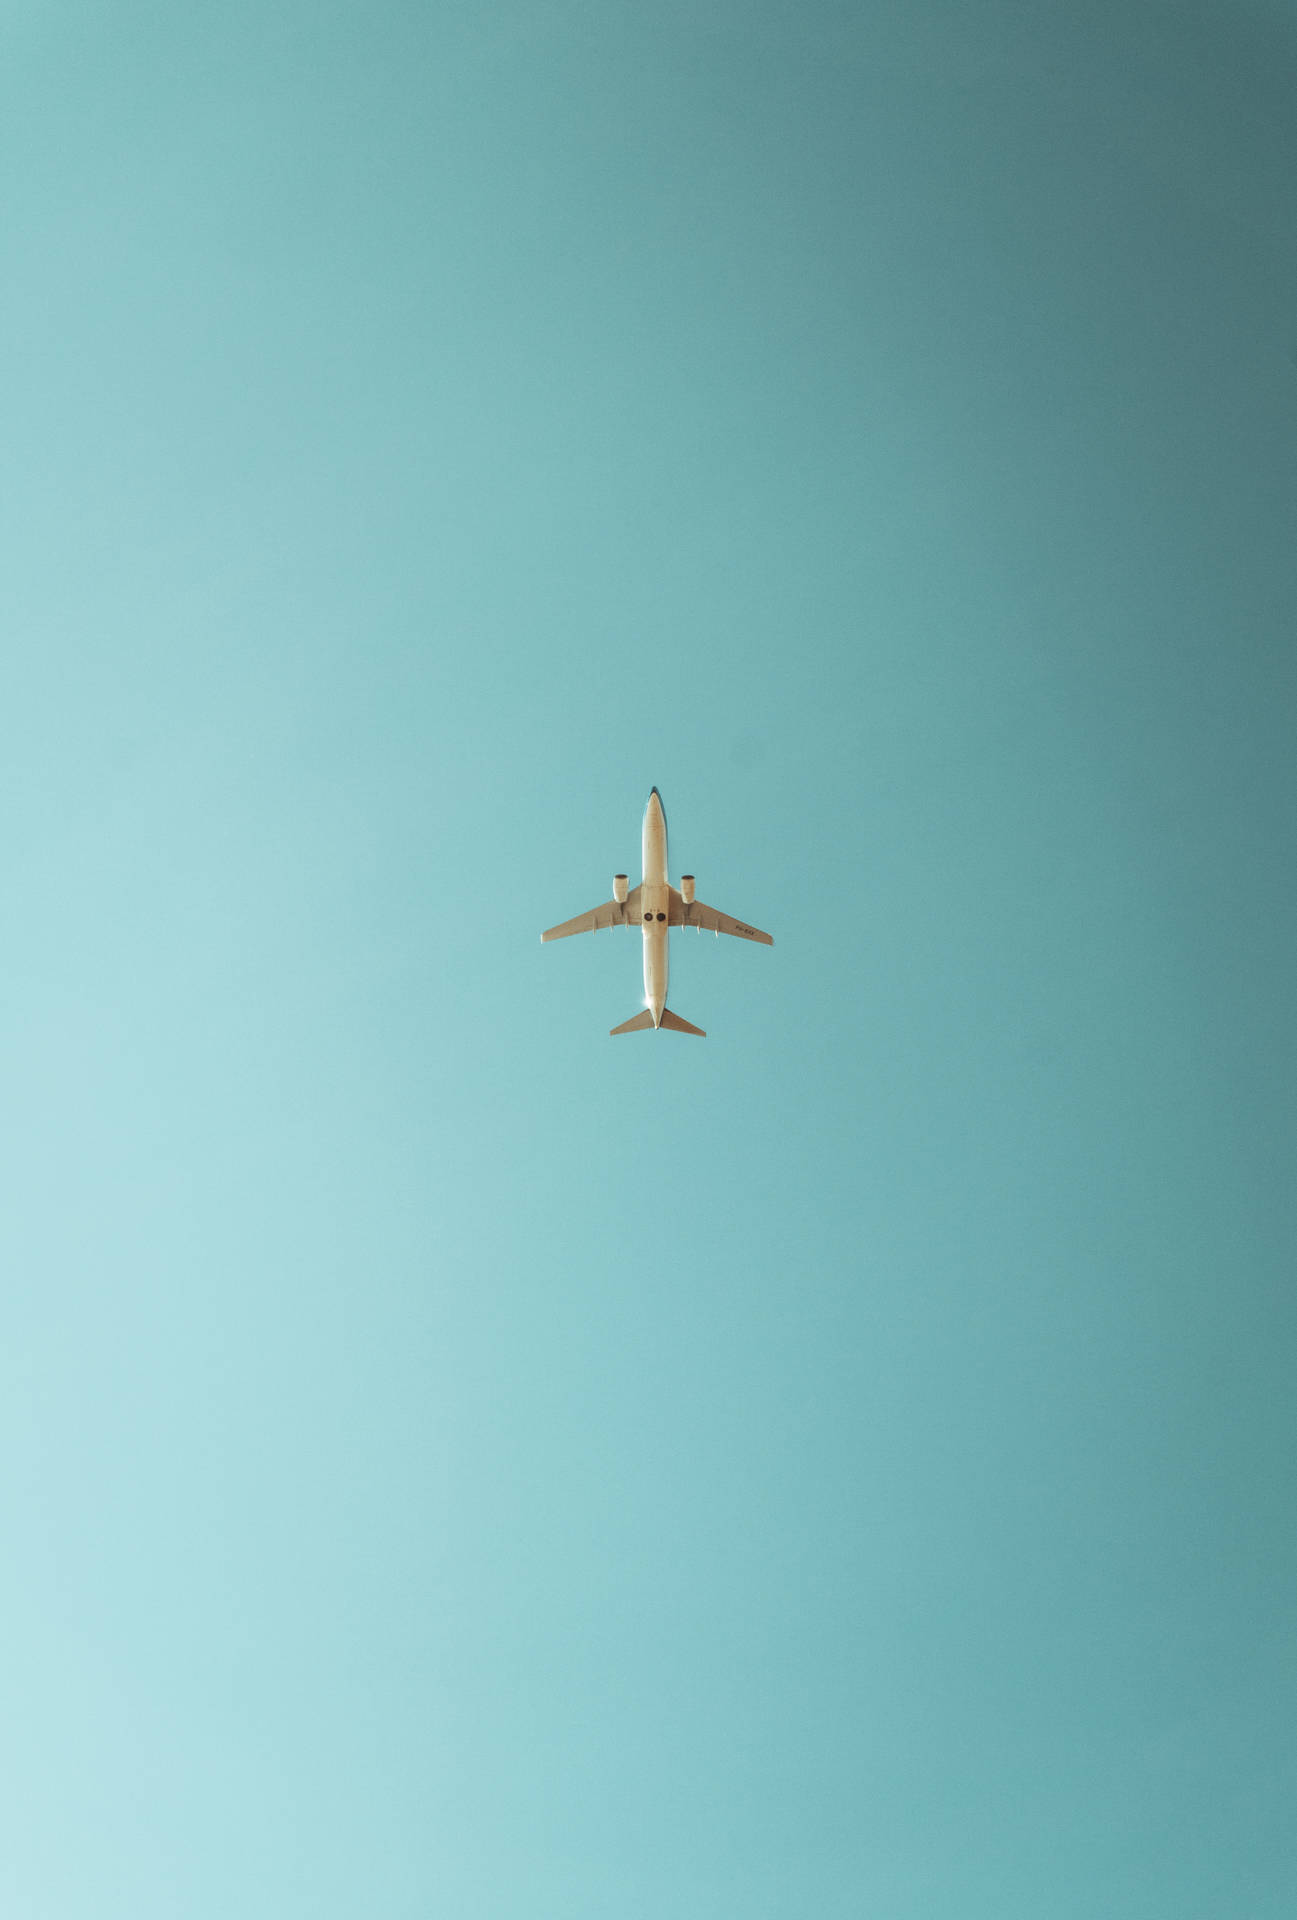 Minimalist Airplane Iphone Background